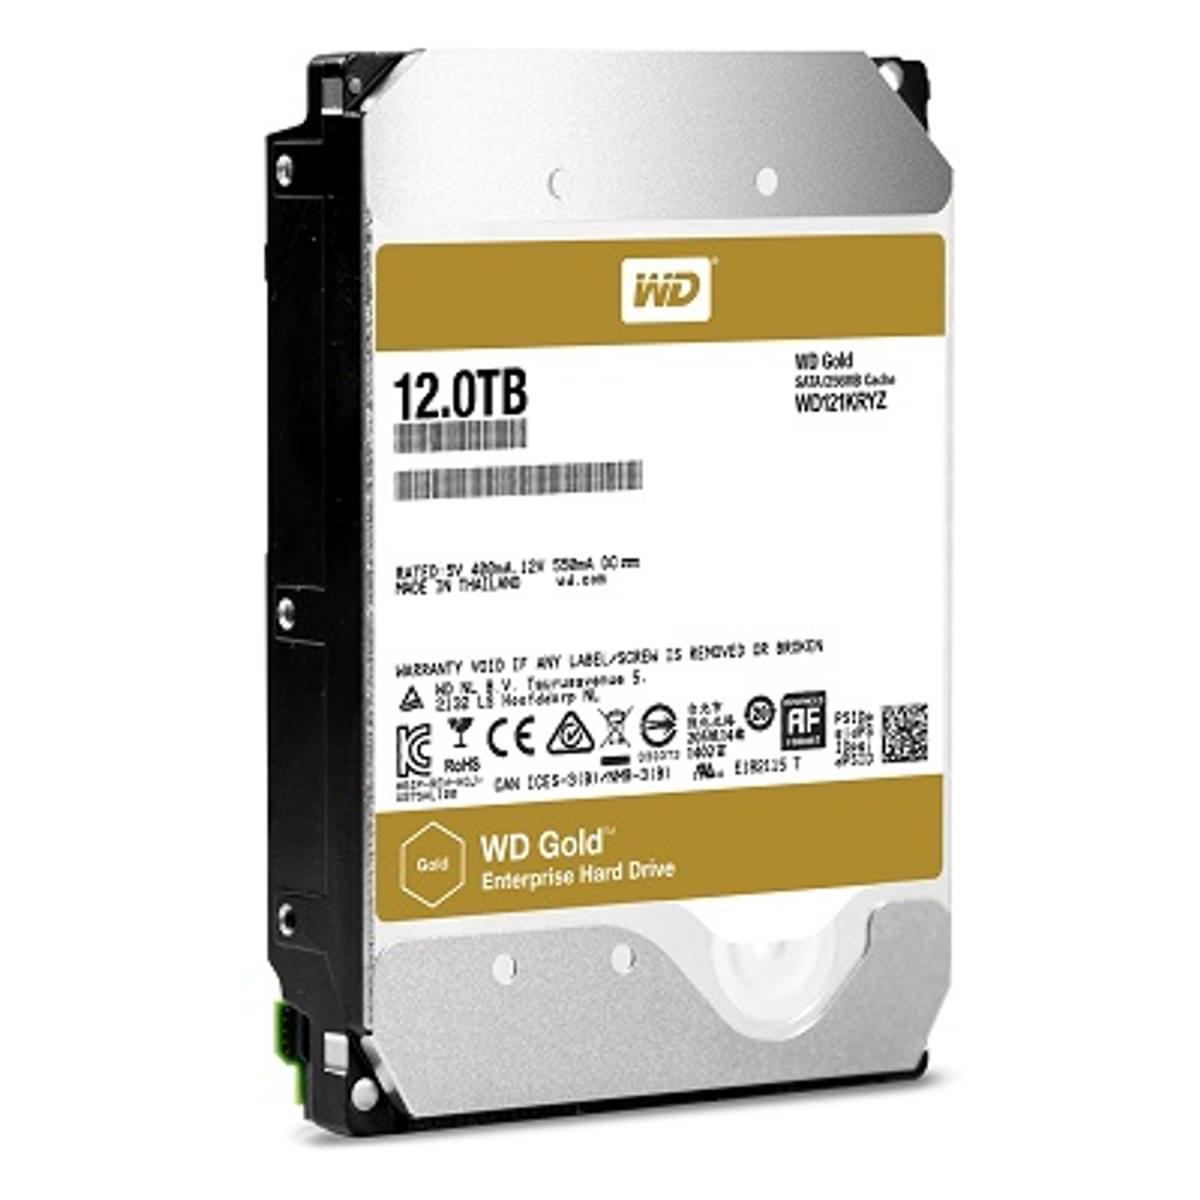 Western Digital lanceert 12TB WD Gold hard drive image